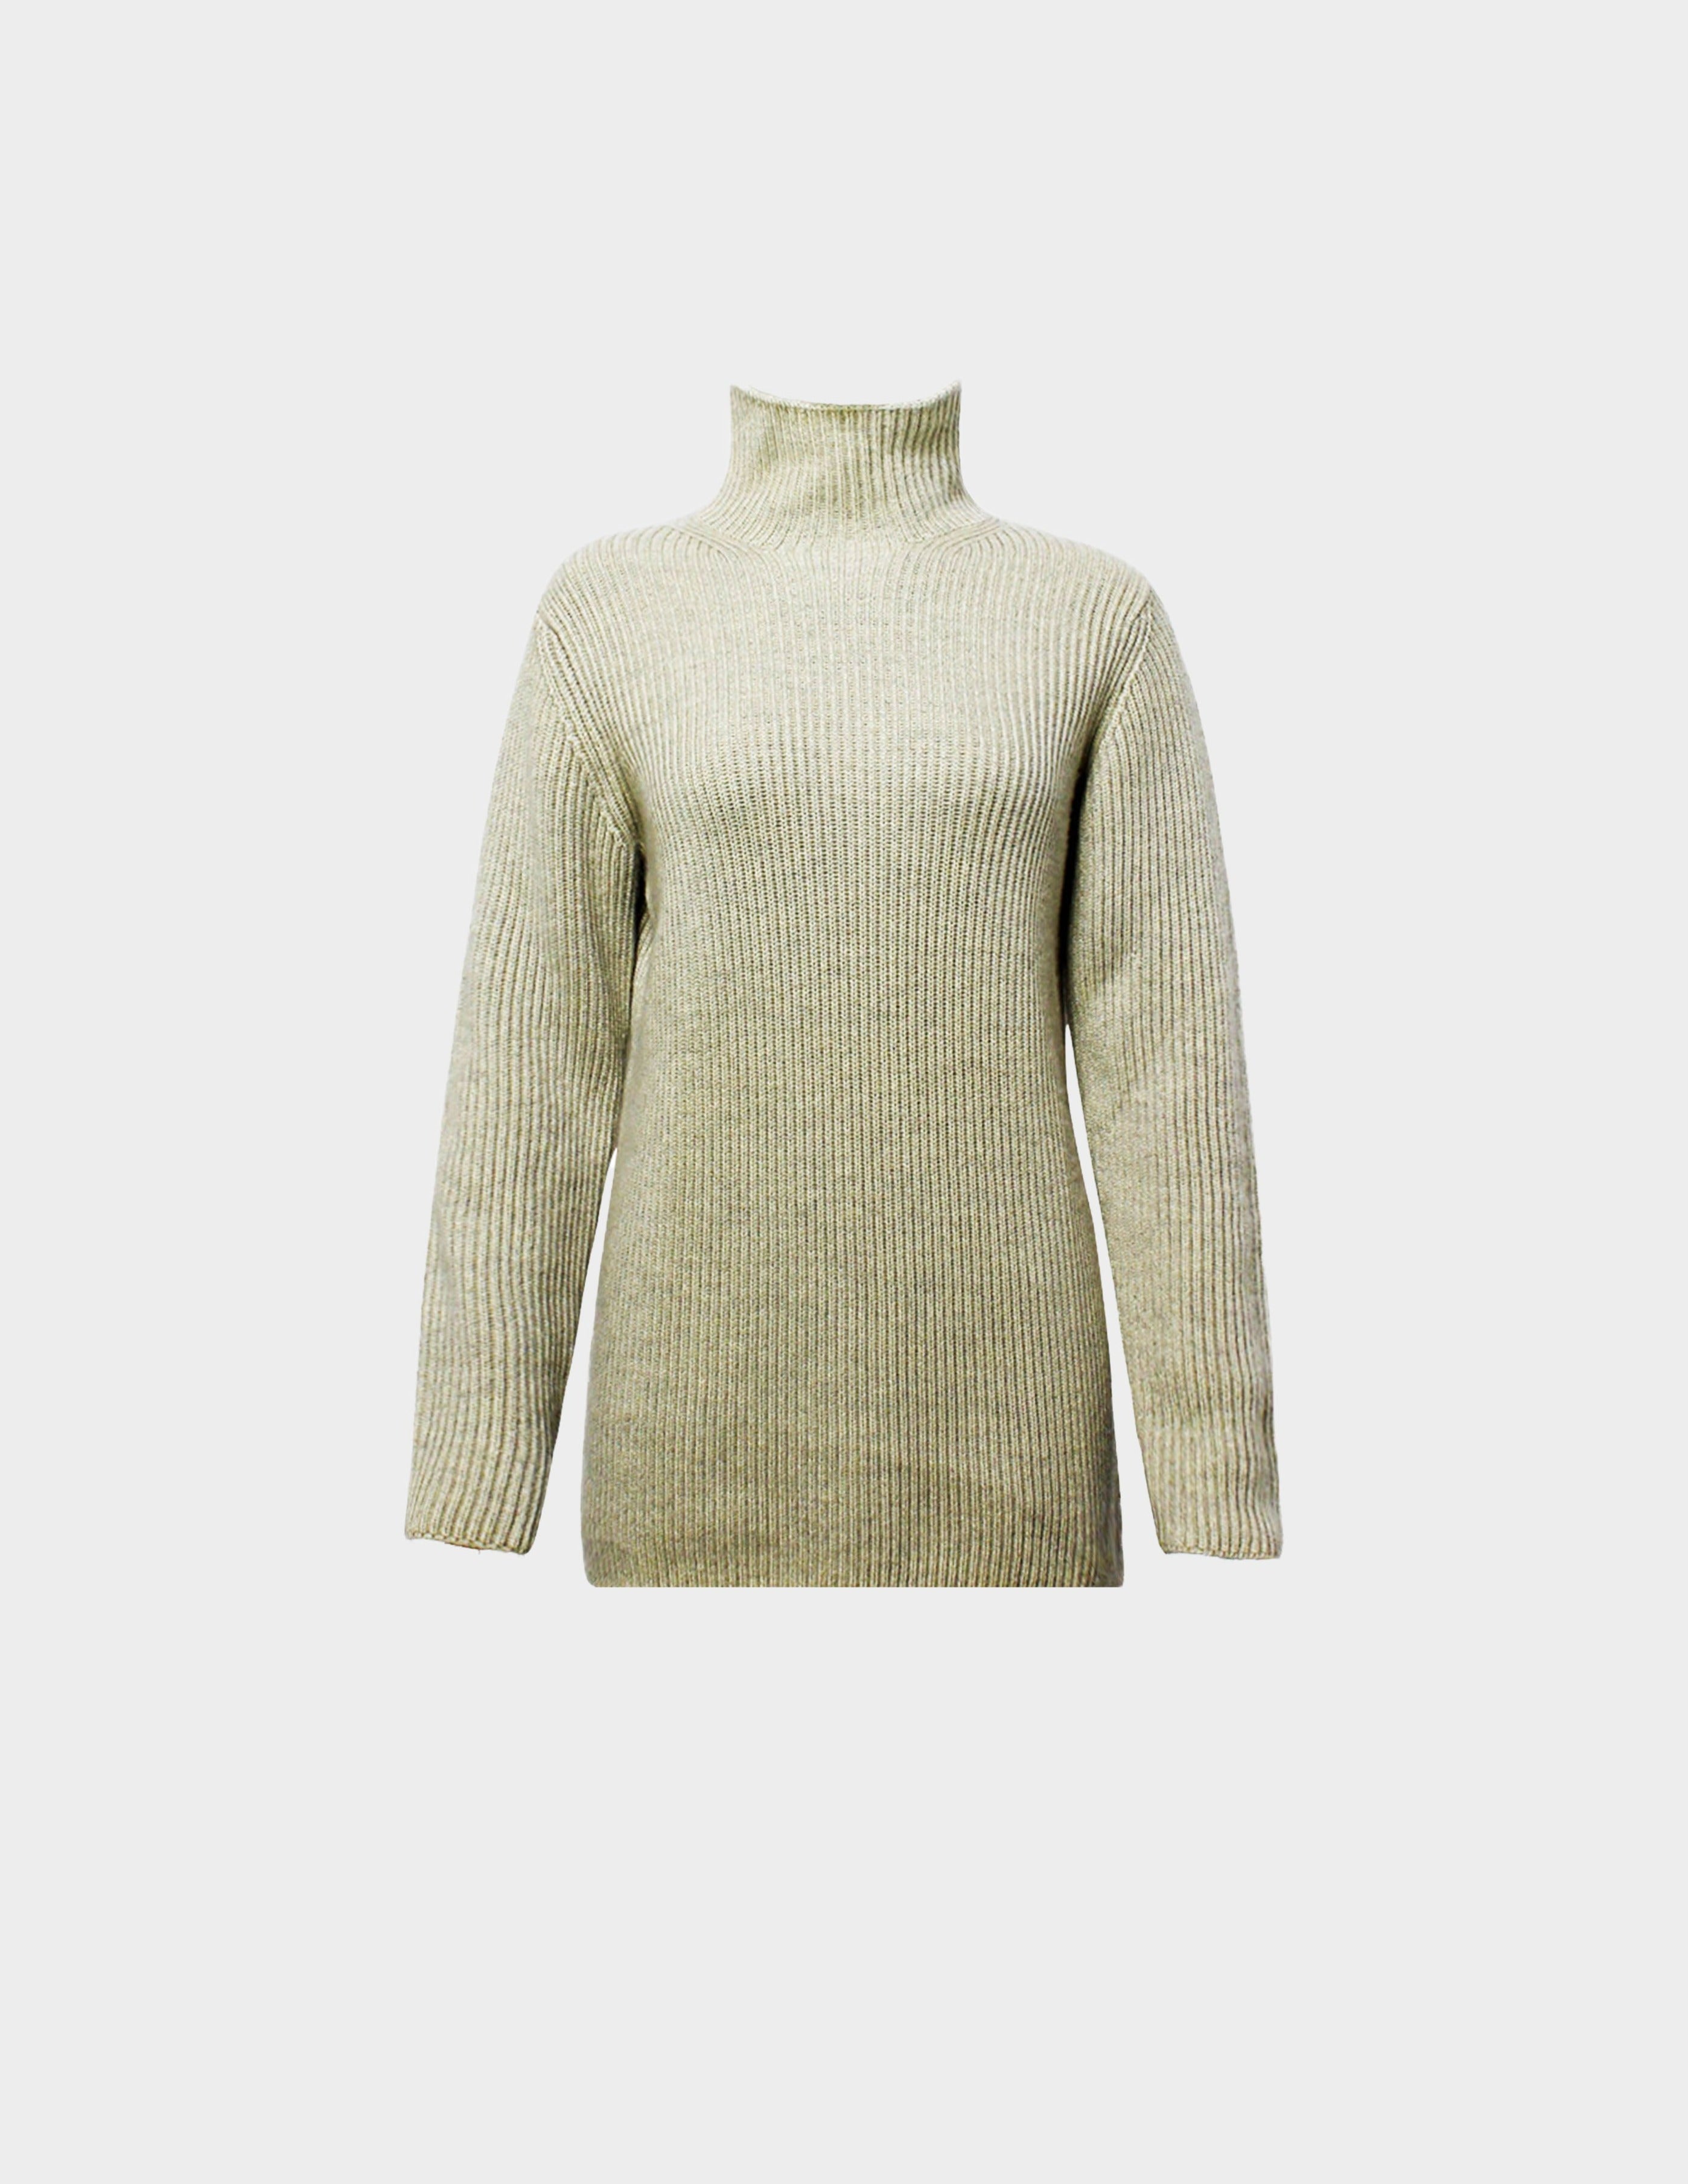 Louis Vuitton Cream Rib Knit Turtle Neck Sweater S